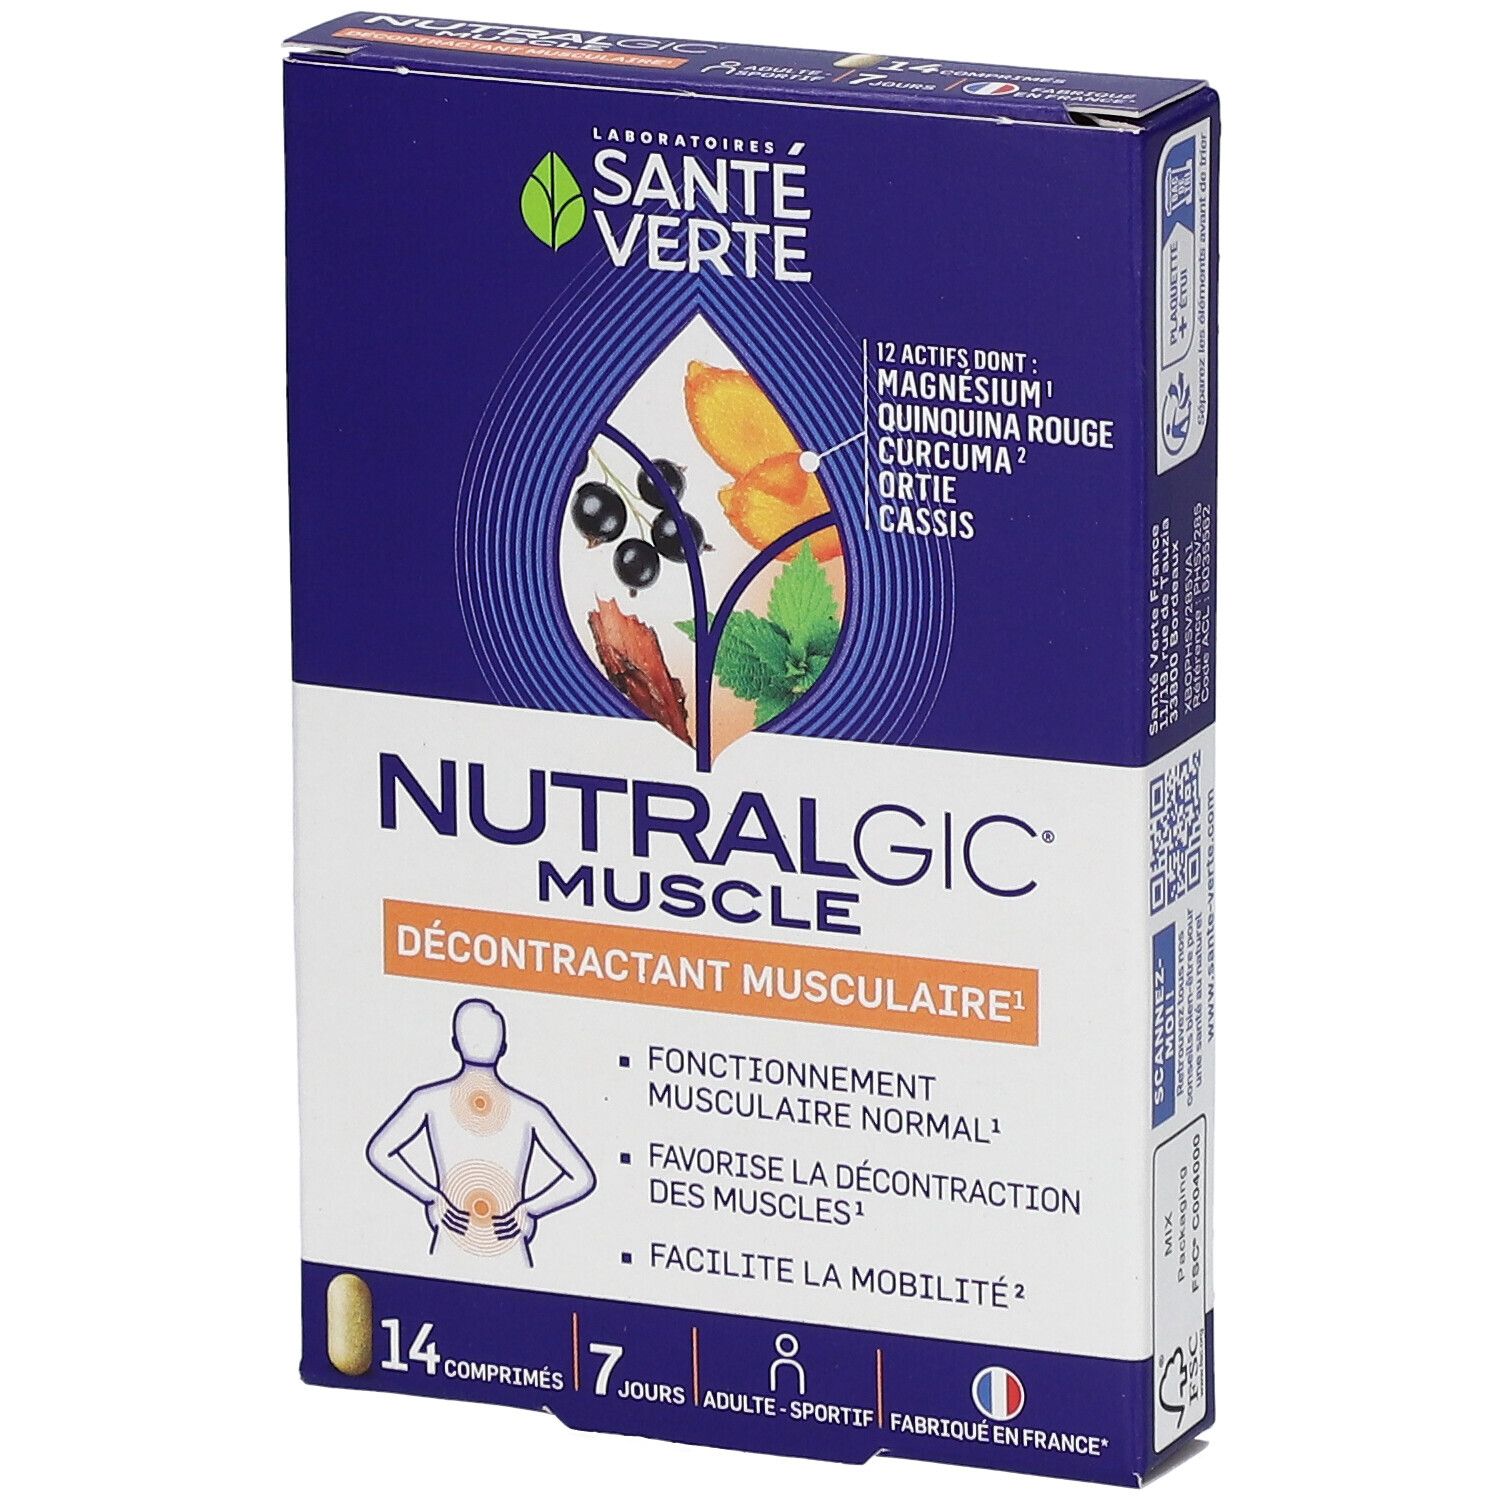 Sante Verte Nutralgic® Muscle